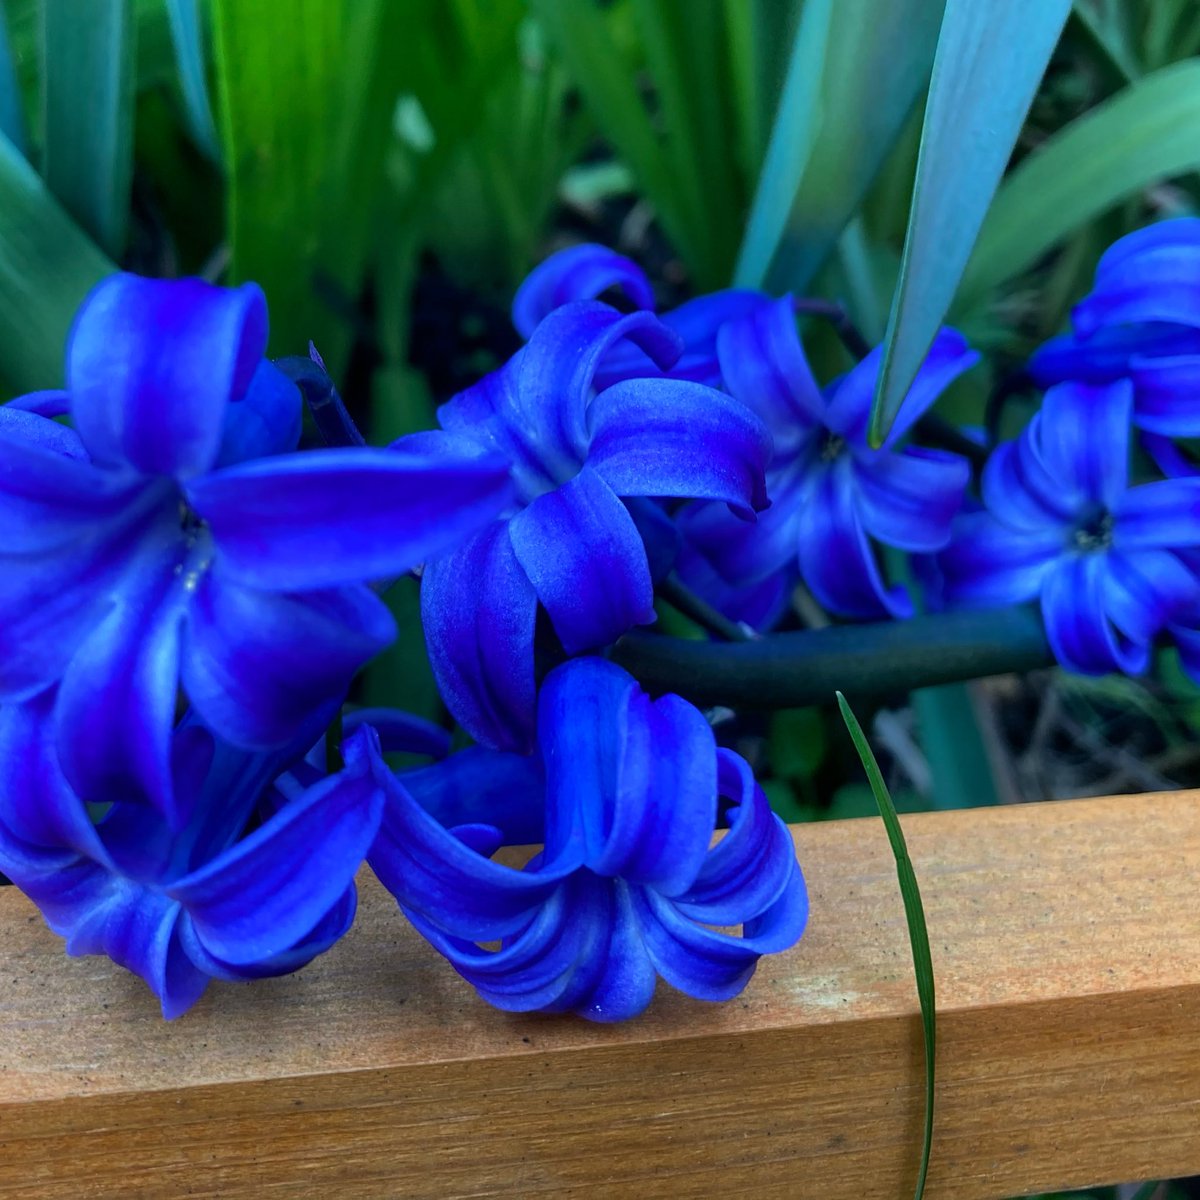 💙Deepest blue Hyacinth, from my Mums garden. A bit too heavy and fallen sideways, but still that colour is so vibrant💙

#NannysGardenWorld

#Flowers #Garden #GardeningTwitter #springbulbs #PlantingTwitter #hyacinth #BanPlasticGrass #PeatFree